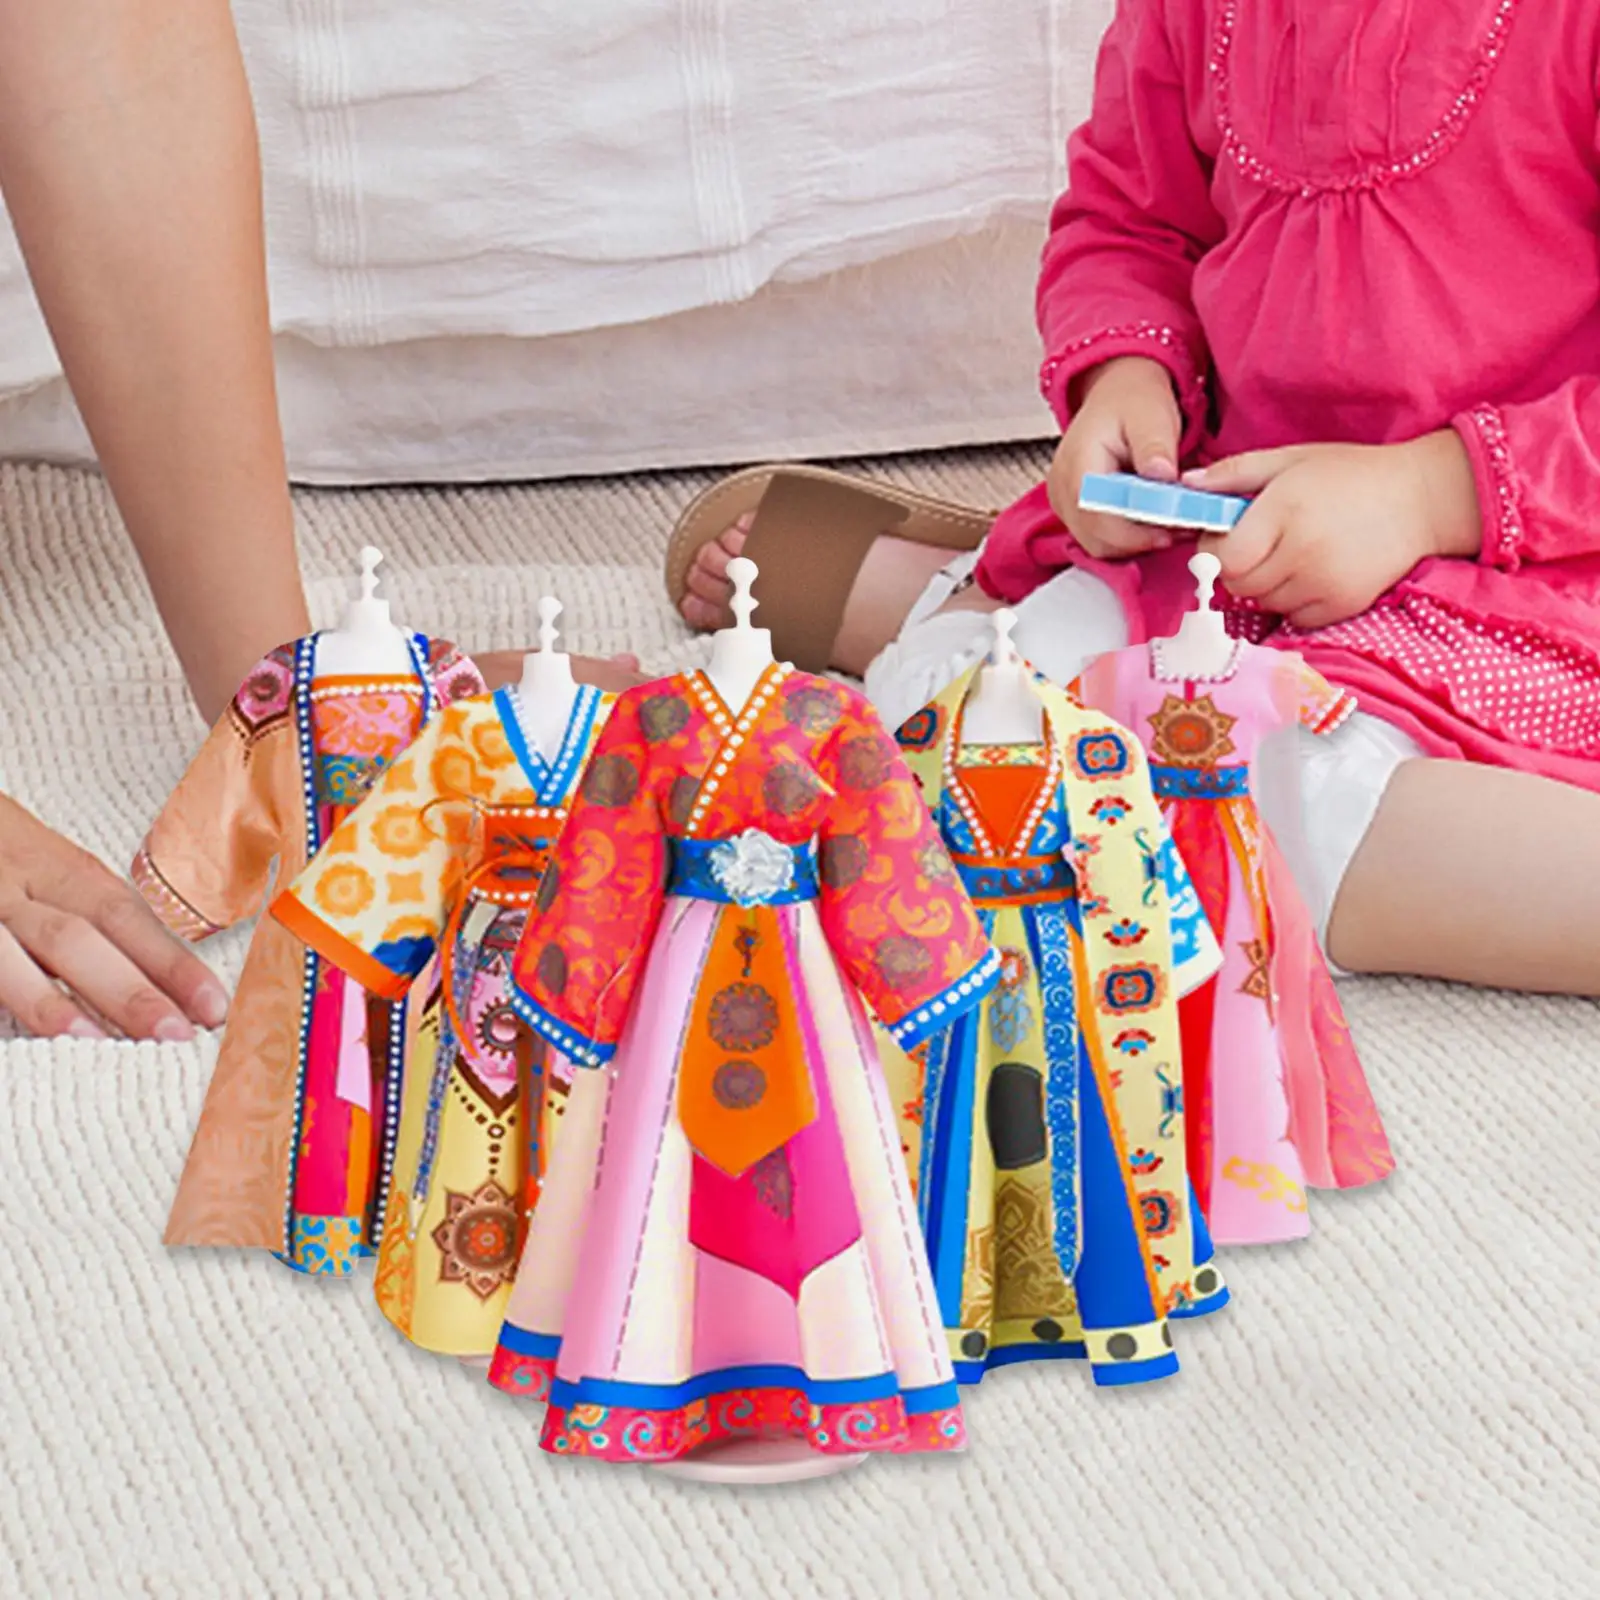 https://ae01.alicdn.com/kf/Sbade0bdb7cd7497eb63e89ed374a731co/Fashion-Design-Kits-Princess-Doll-Clothes-Making-Girls-Sewing-Kits-for-Children-Kids-Teen-Age-6.jpg